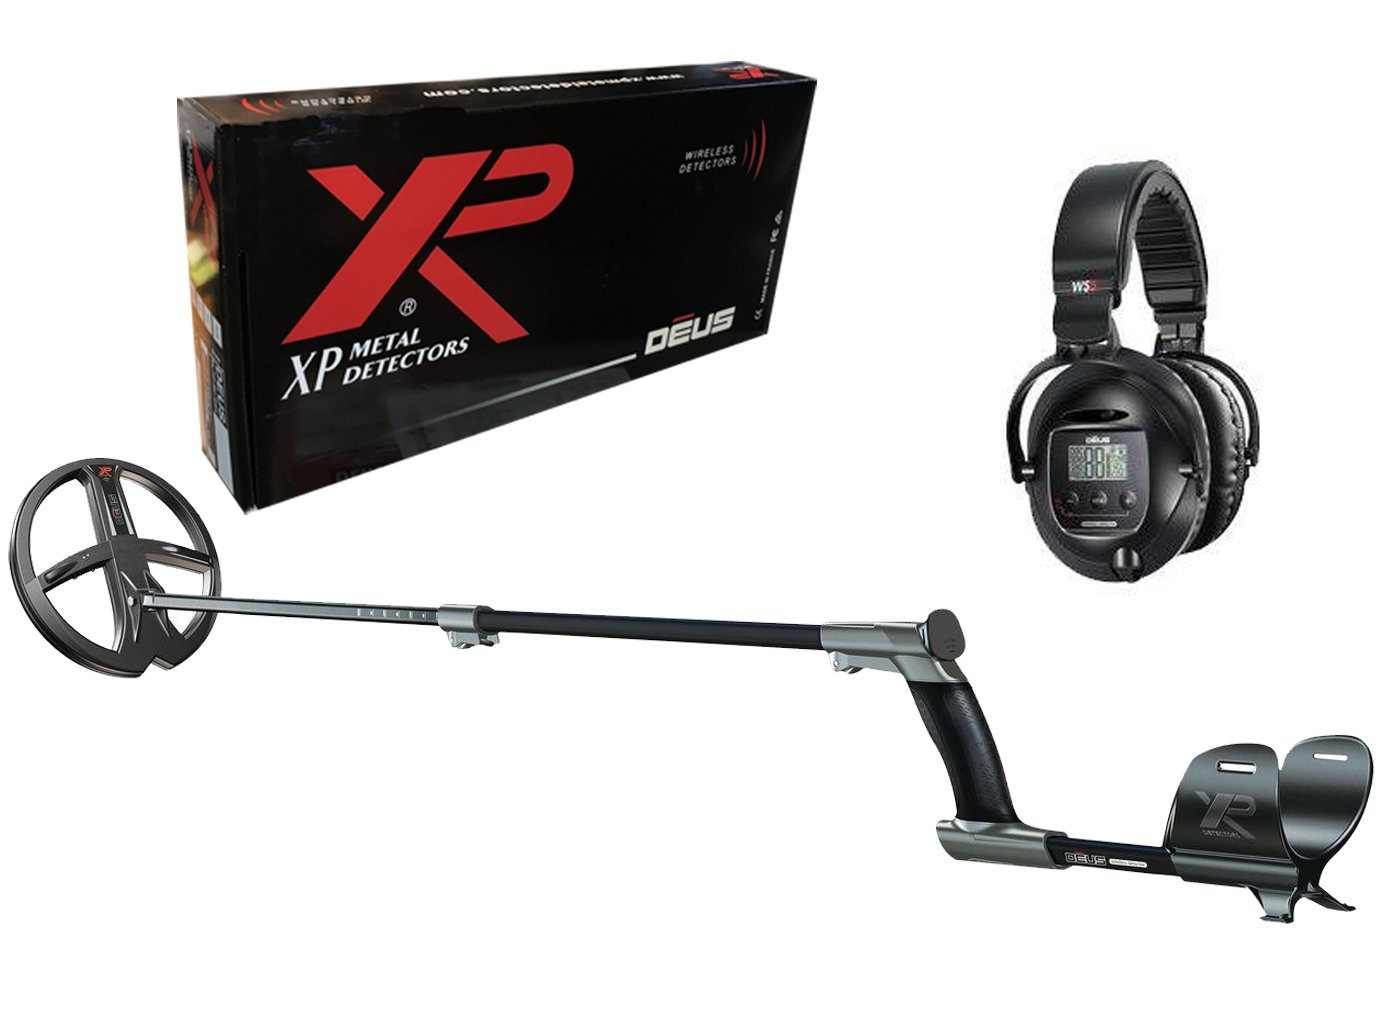 XP DEUS Lite Metal Detector - 11" X35 Search Coil and WS5 Wireless Headphones